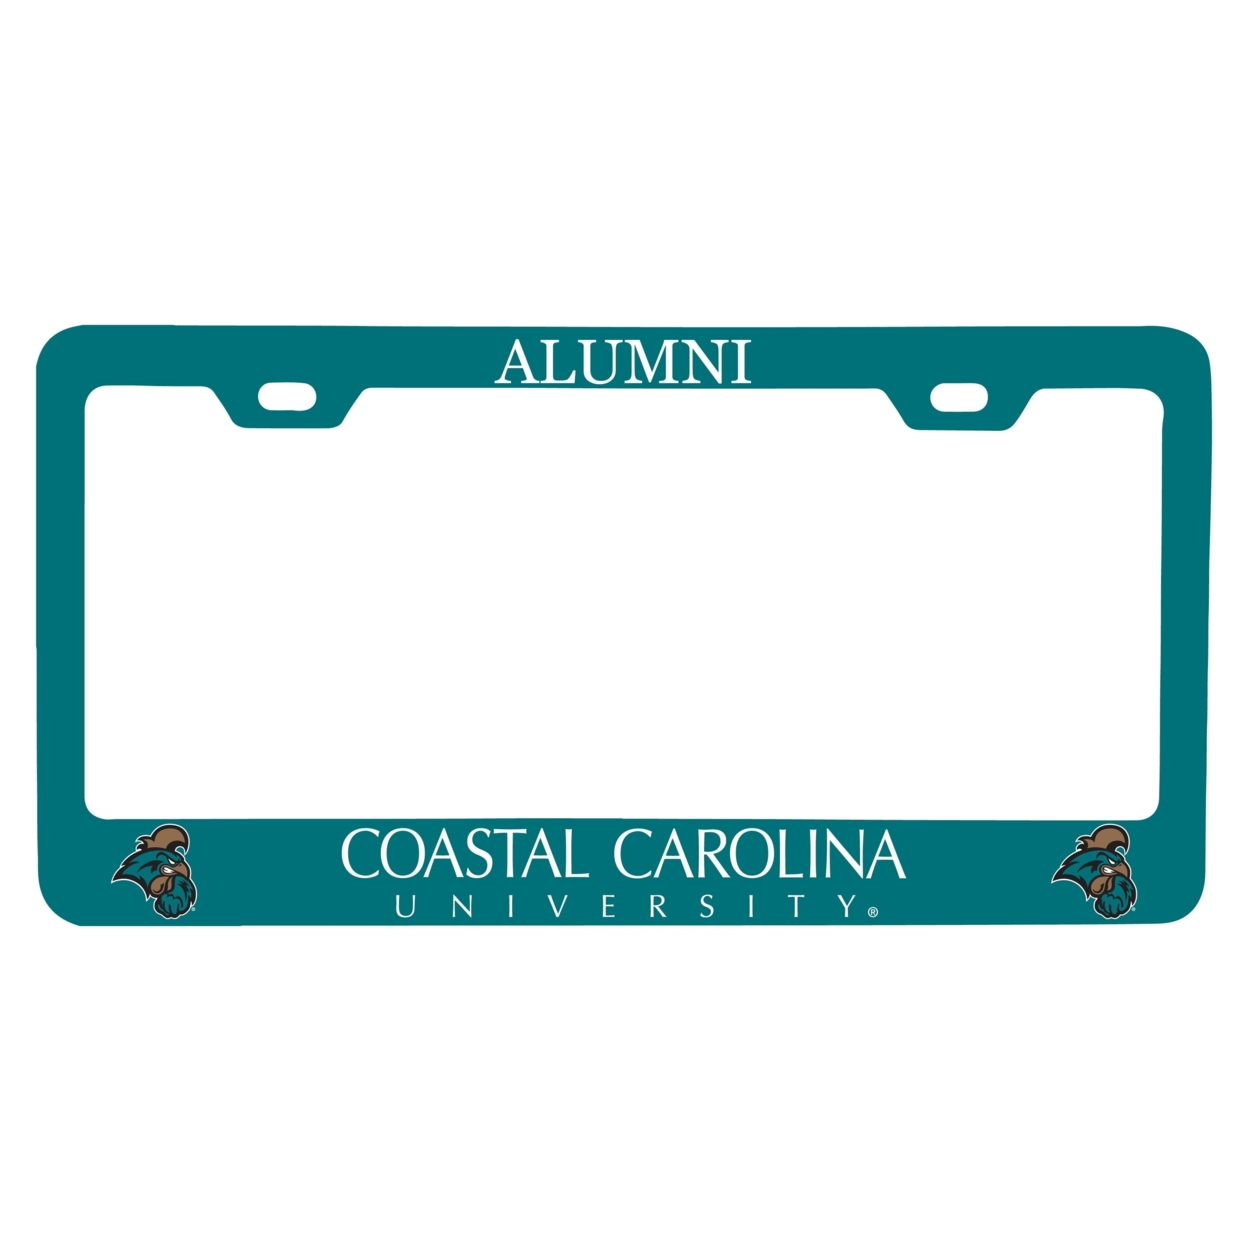 Coastal Carolina University Alumni License Plate Frame